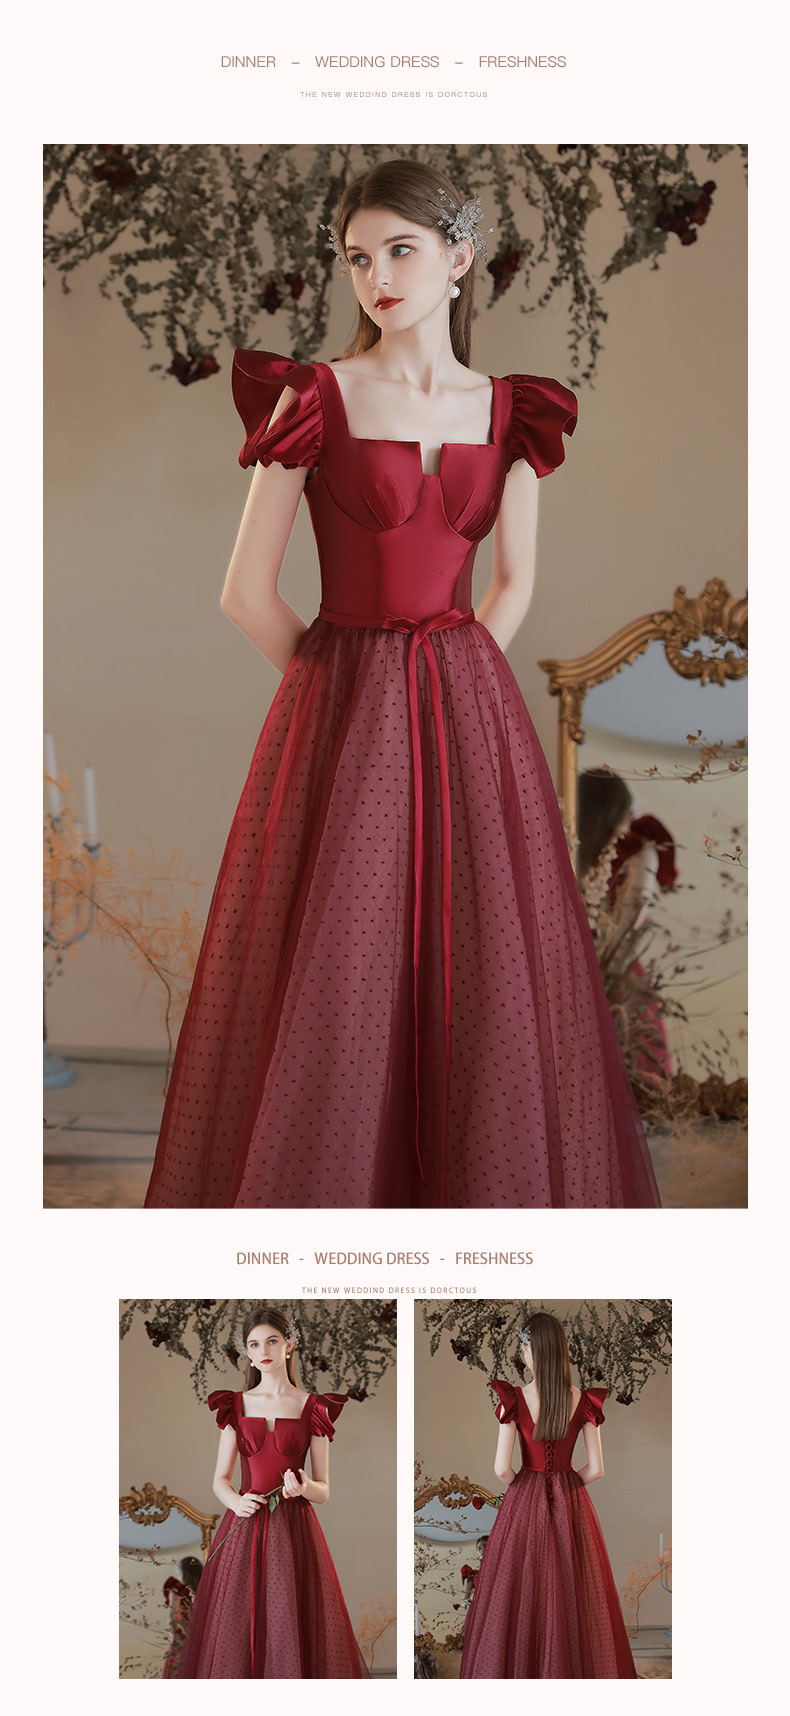 Sleeveless-Red-Satin-Prom-Dress-Long-Evening-Formal-Wear-Ballgown11.jpg